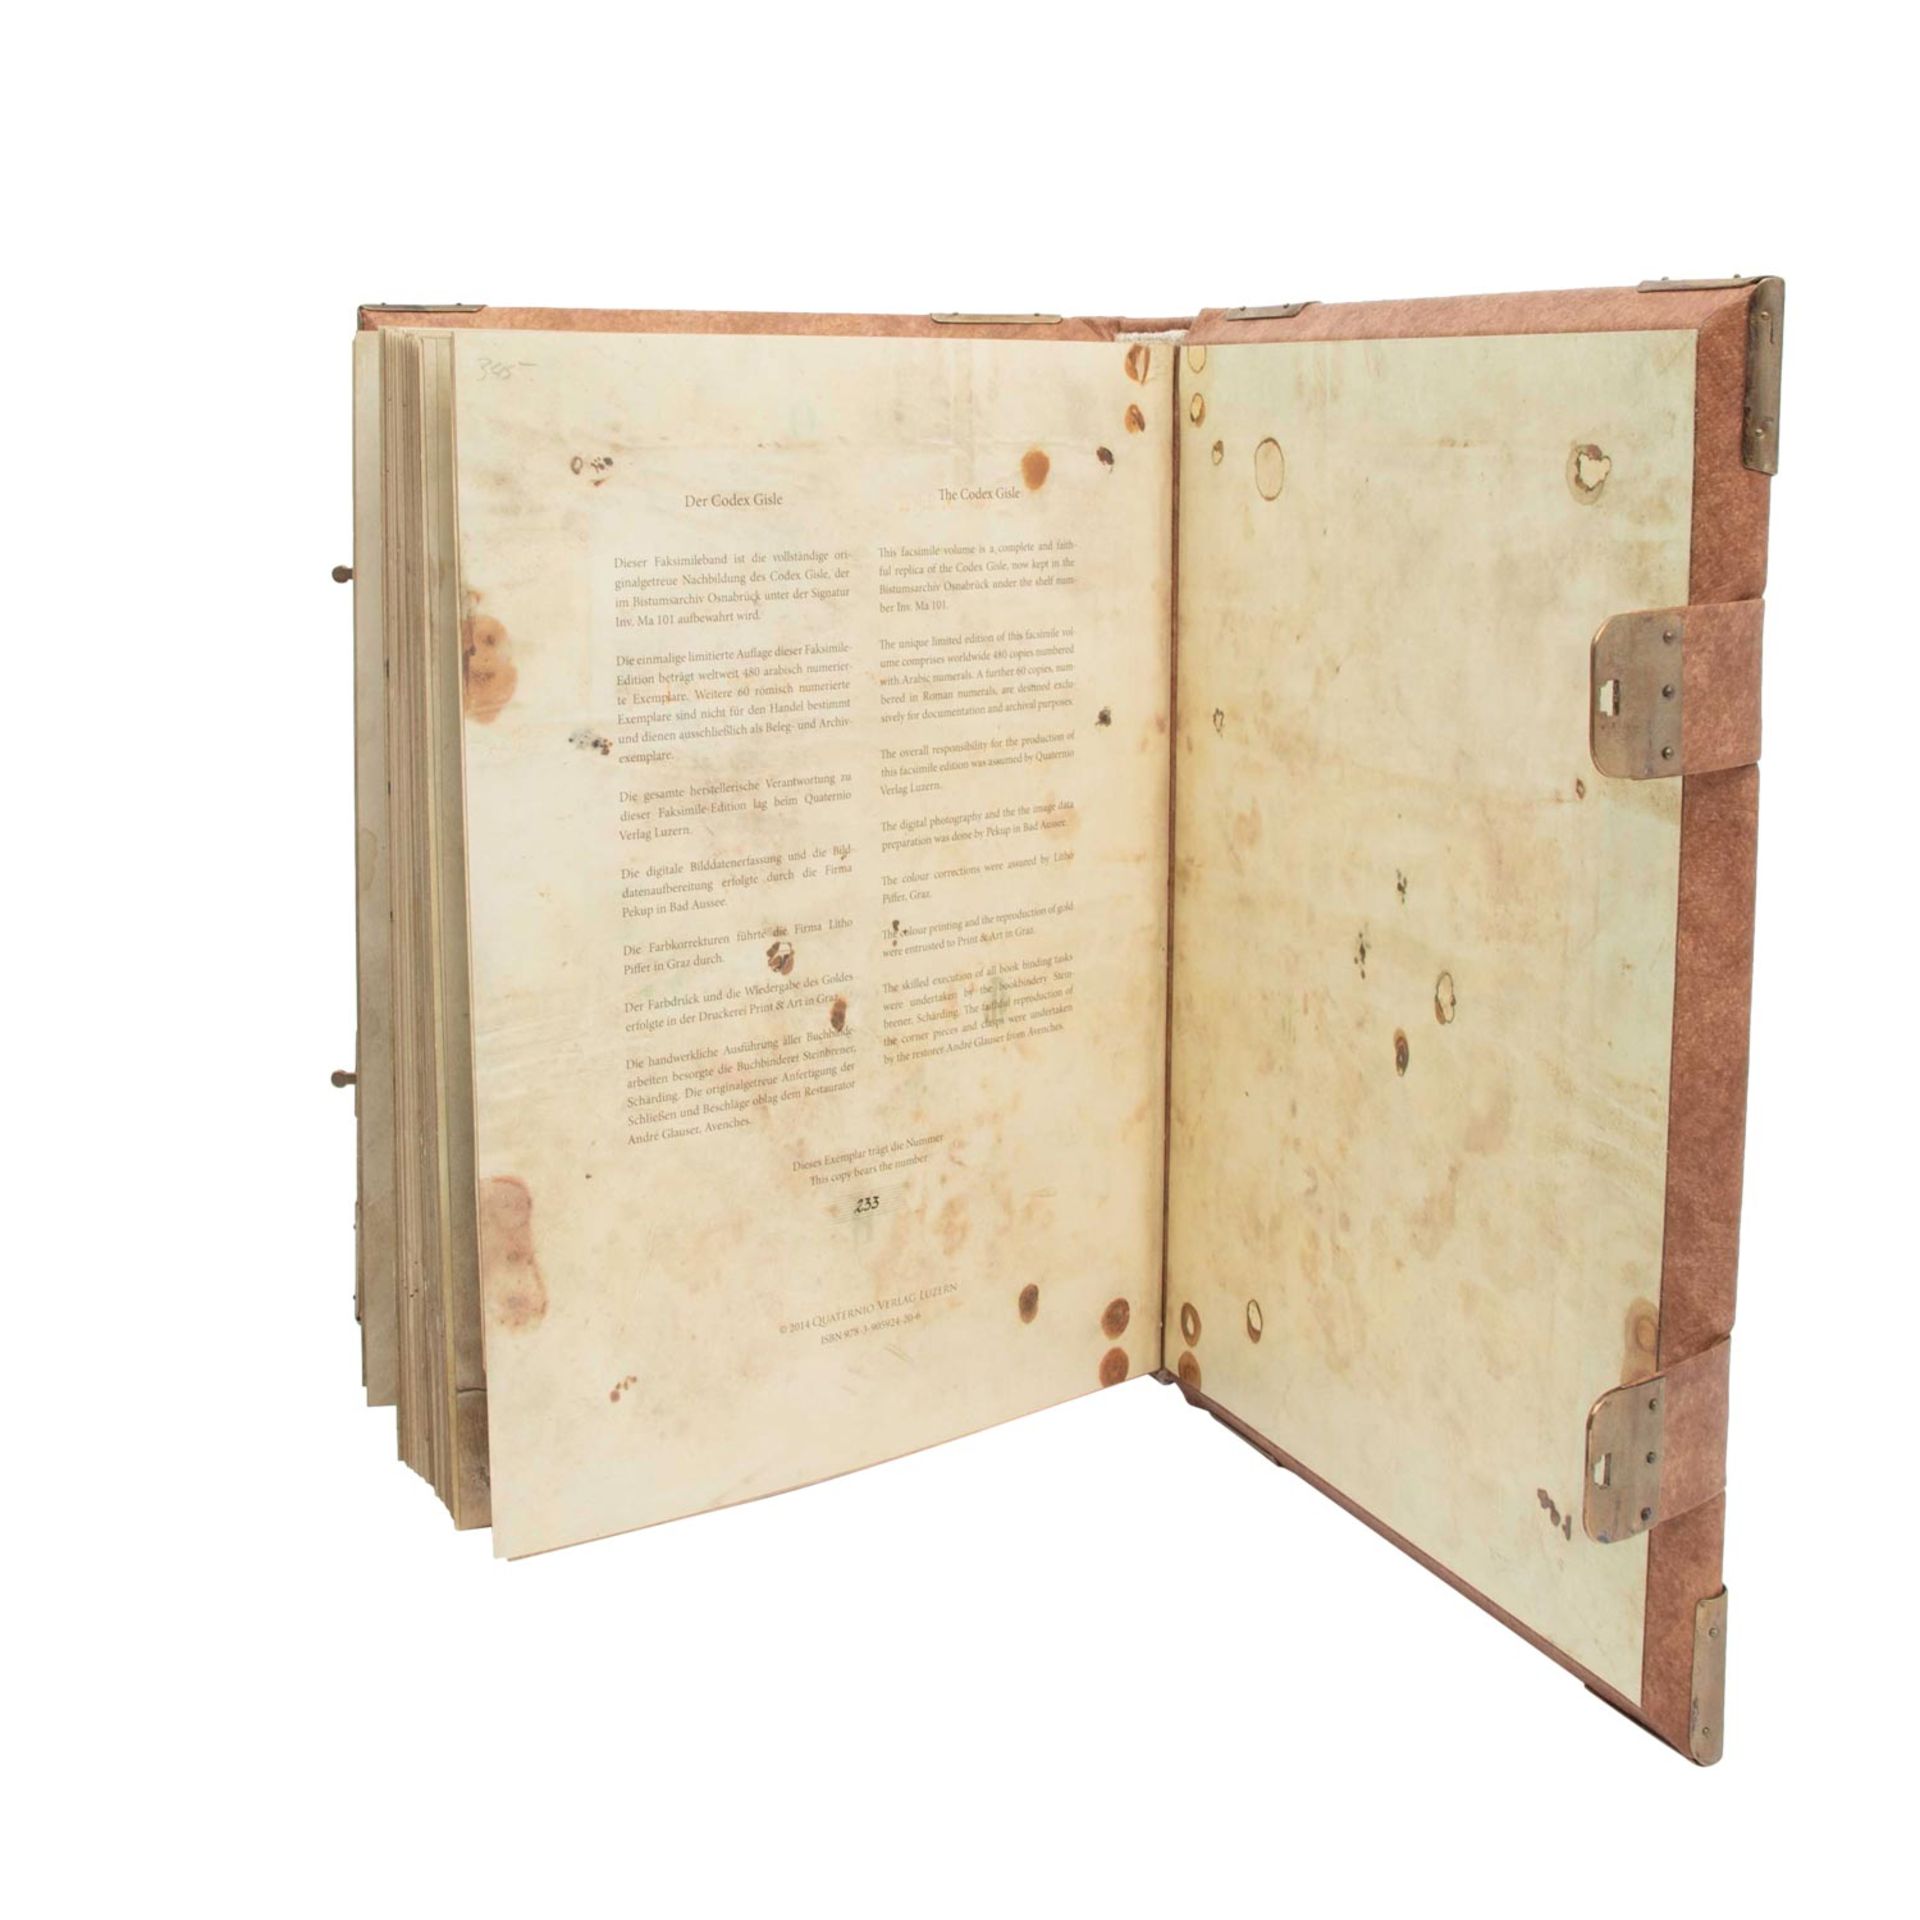 Faksimile "Der Codex Gisle" , mittelalterliches Musikmanuskript - - Image 7 of 8